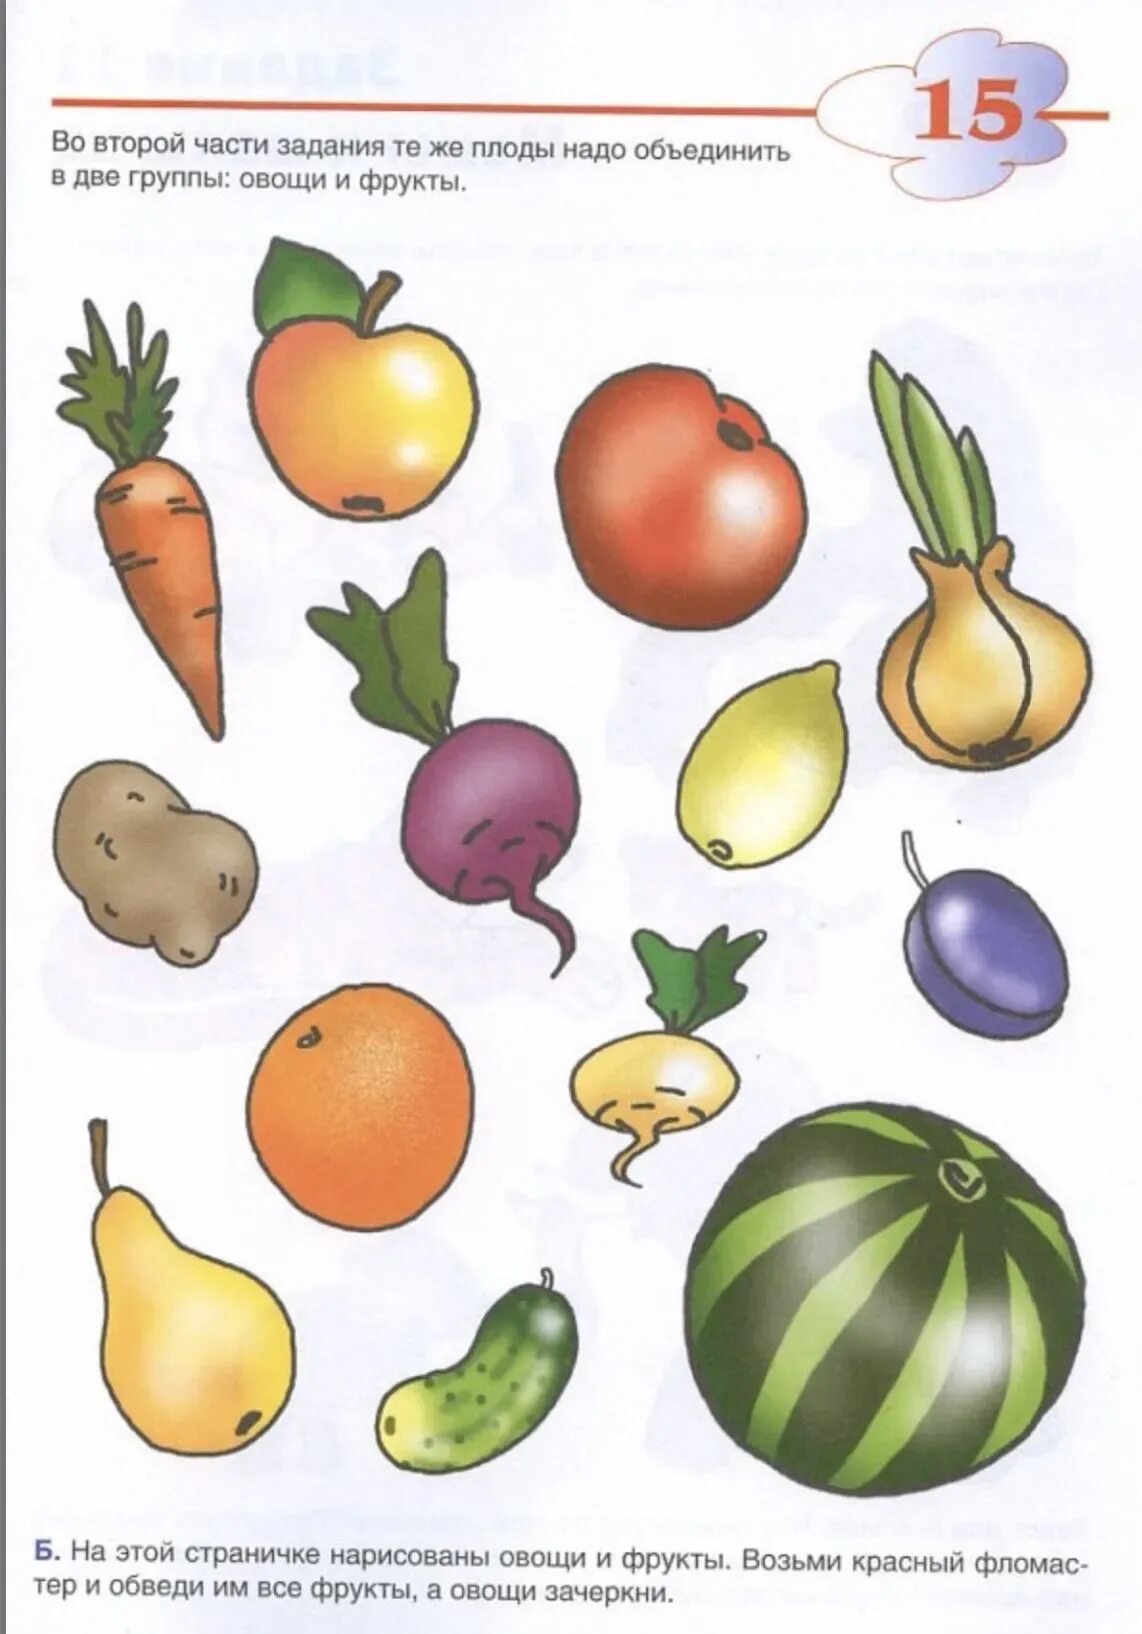 Тест на овощи и фрукты